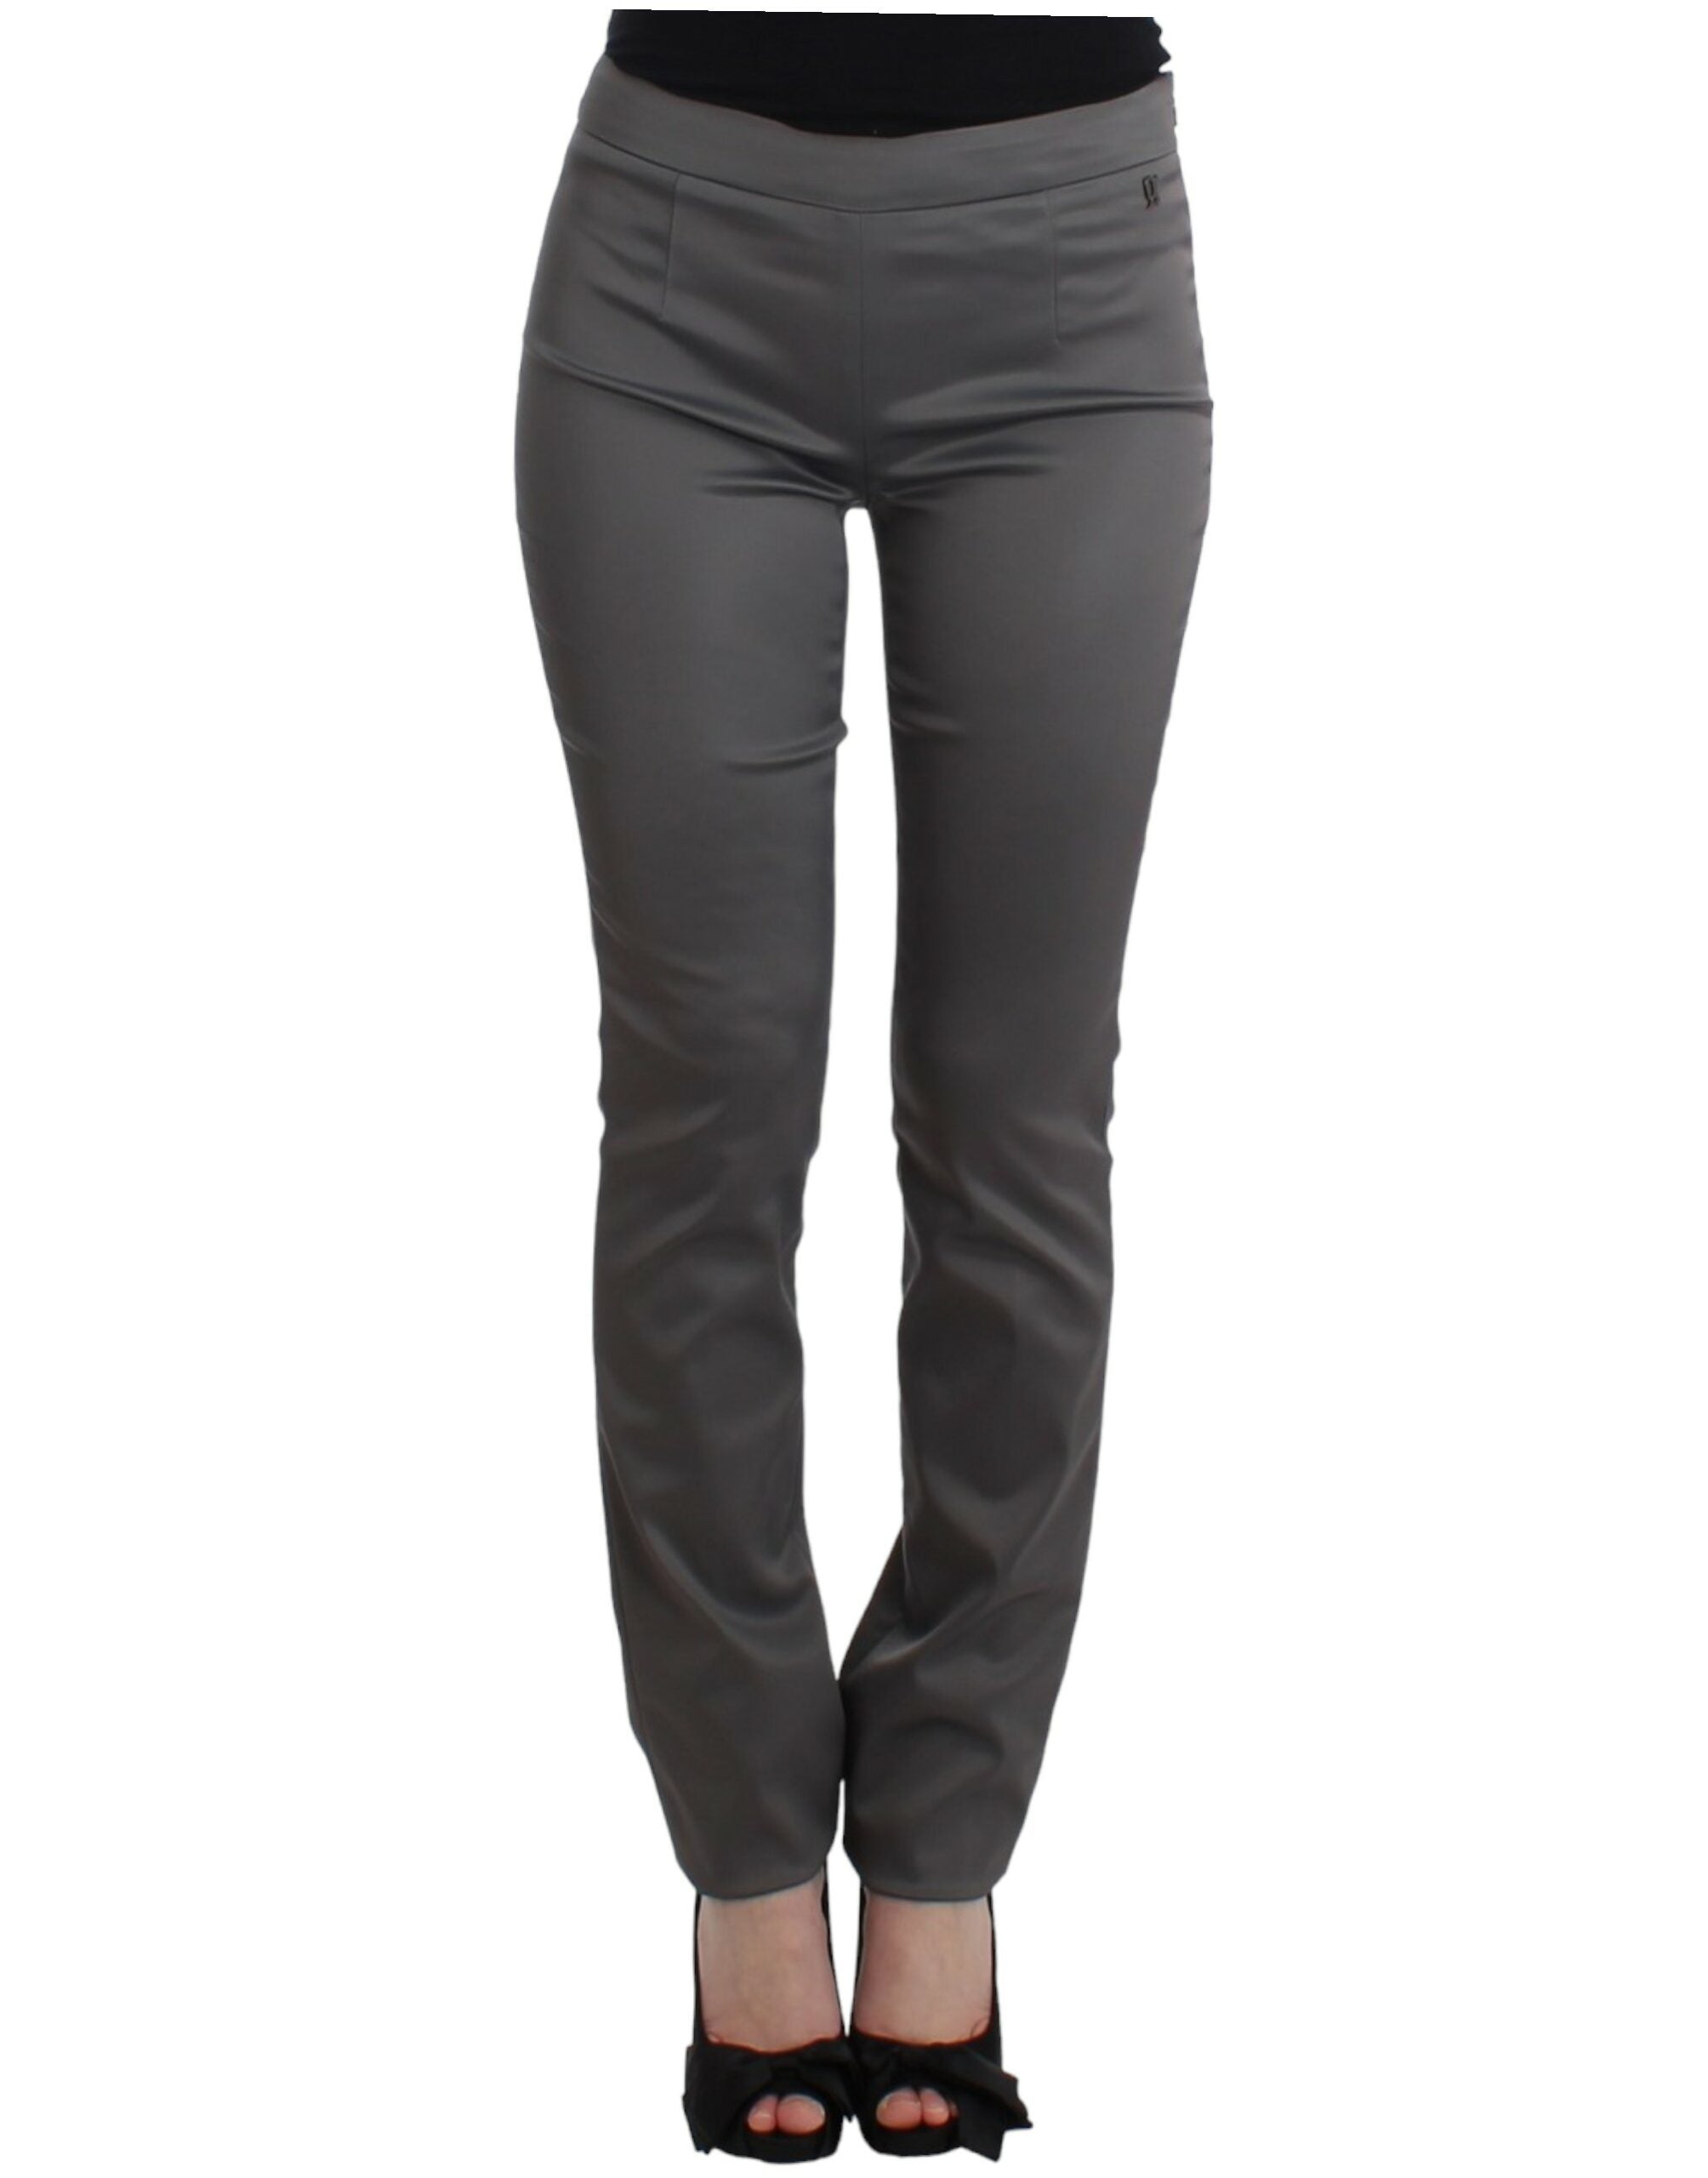 Chic Gray Slim-Fit Designer Pants